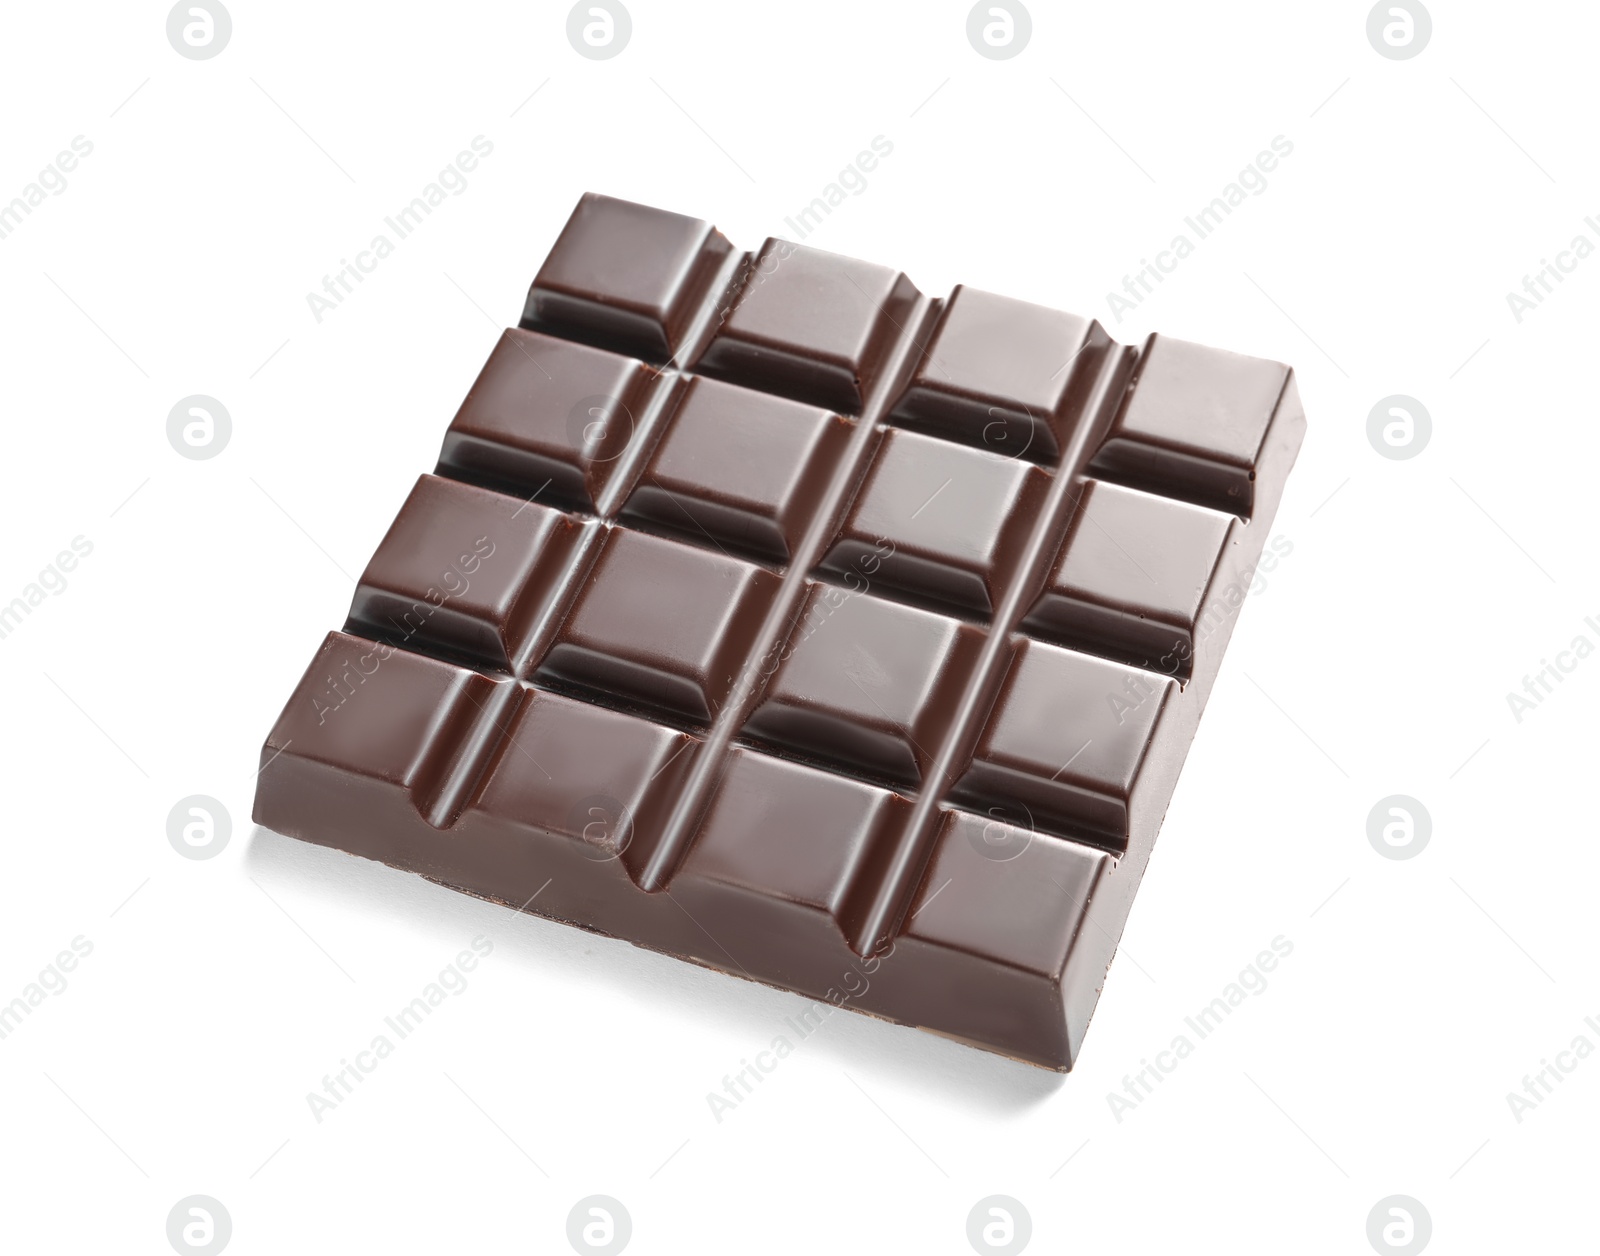 Photo of Tasty dark chocolate bar on white background